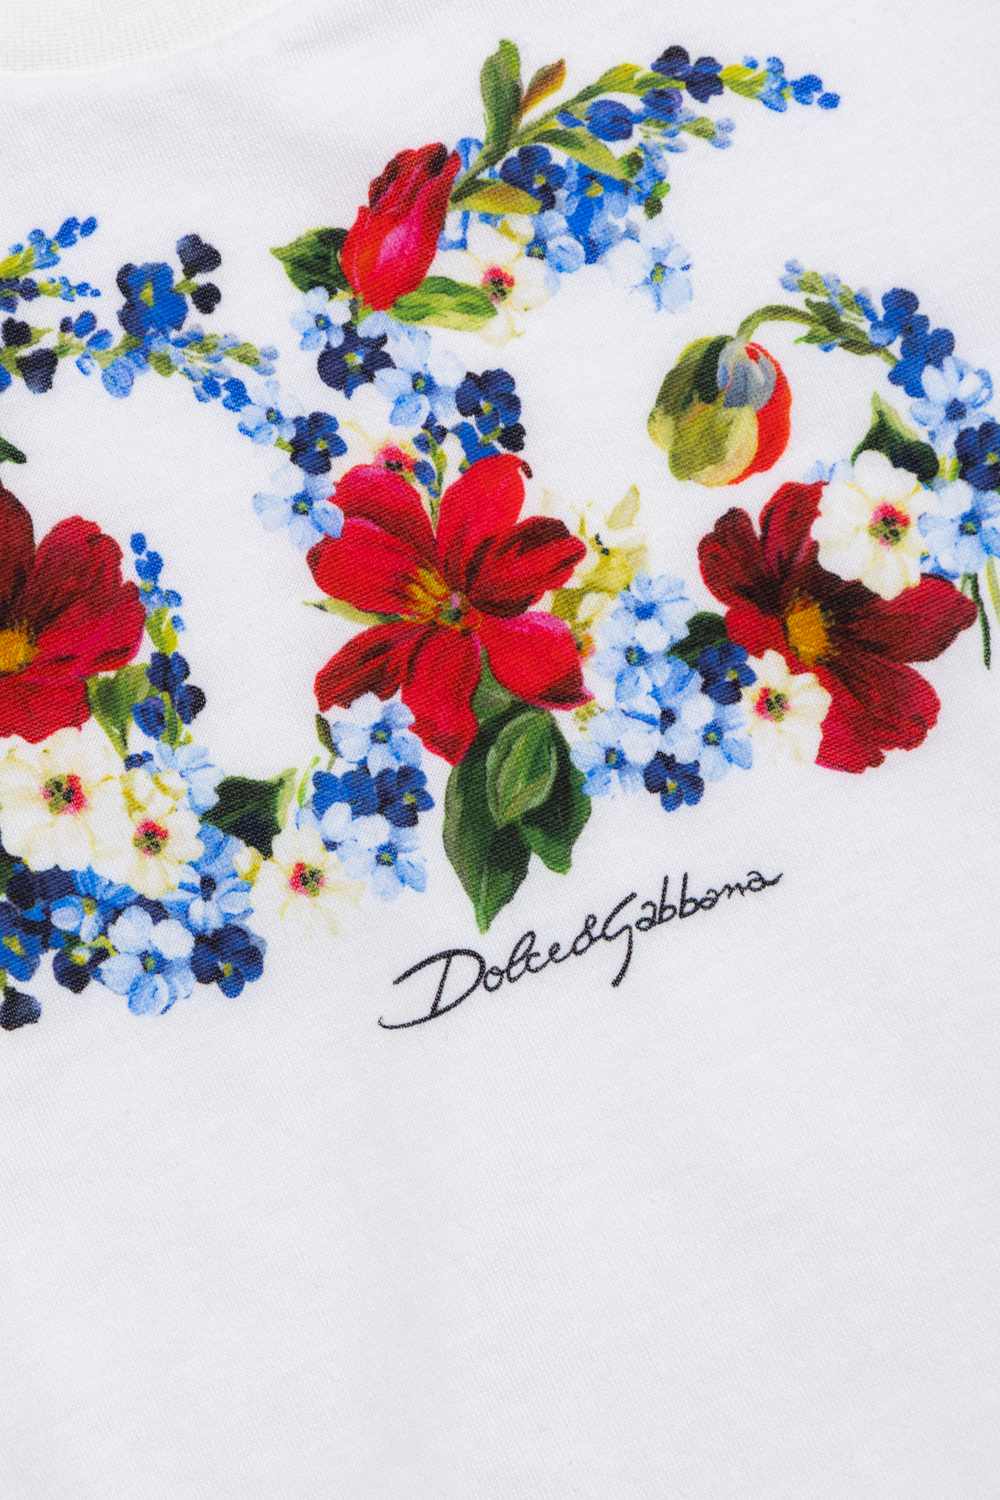 Dolce & Gabbana Eyewear Miami pilot sunglasses T-shirt with floral motif